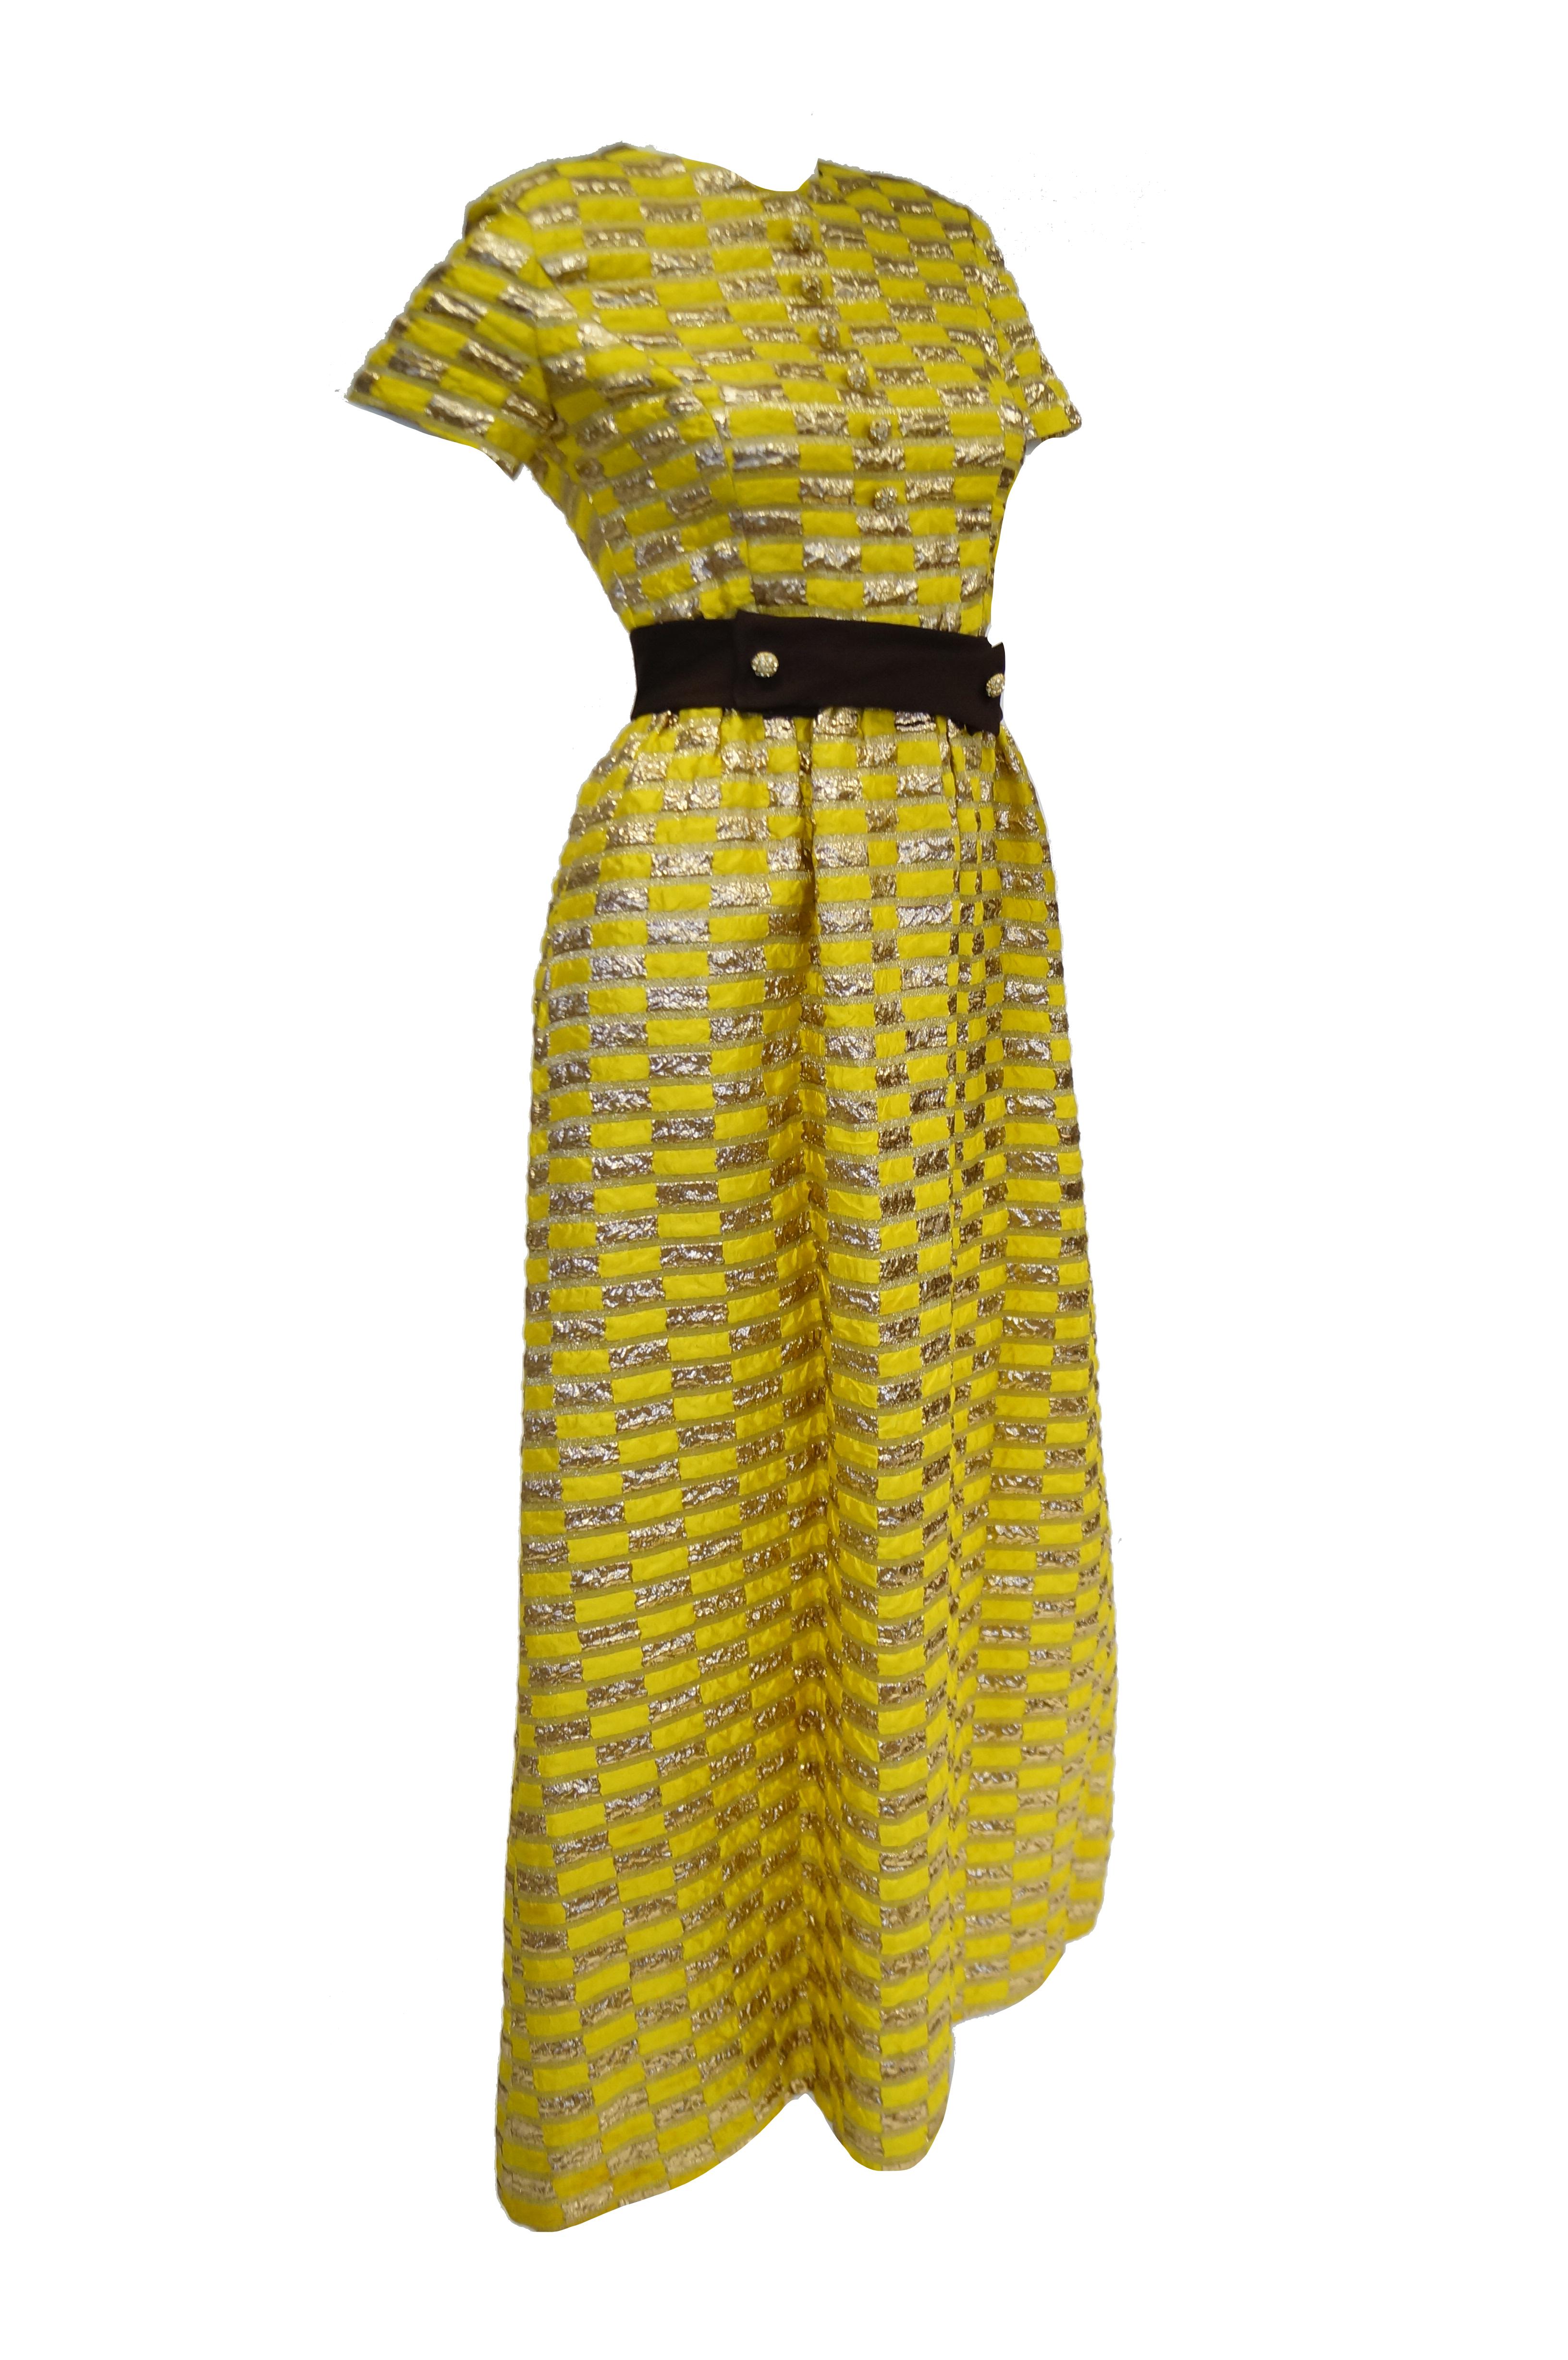 Women's 1960s Oscar de la Renta Yellow and Gold Checkerboard Print Evening Dress